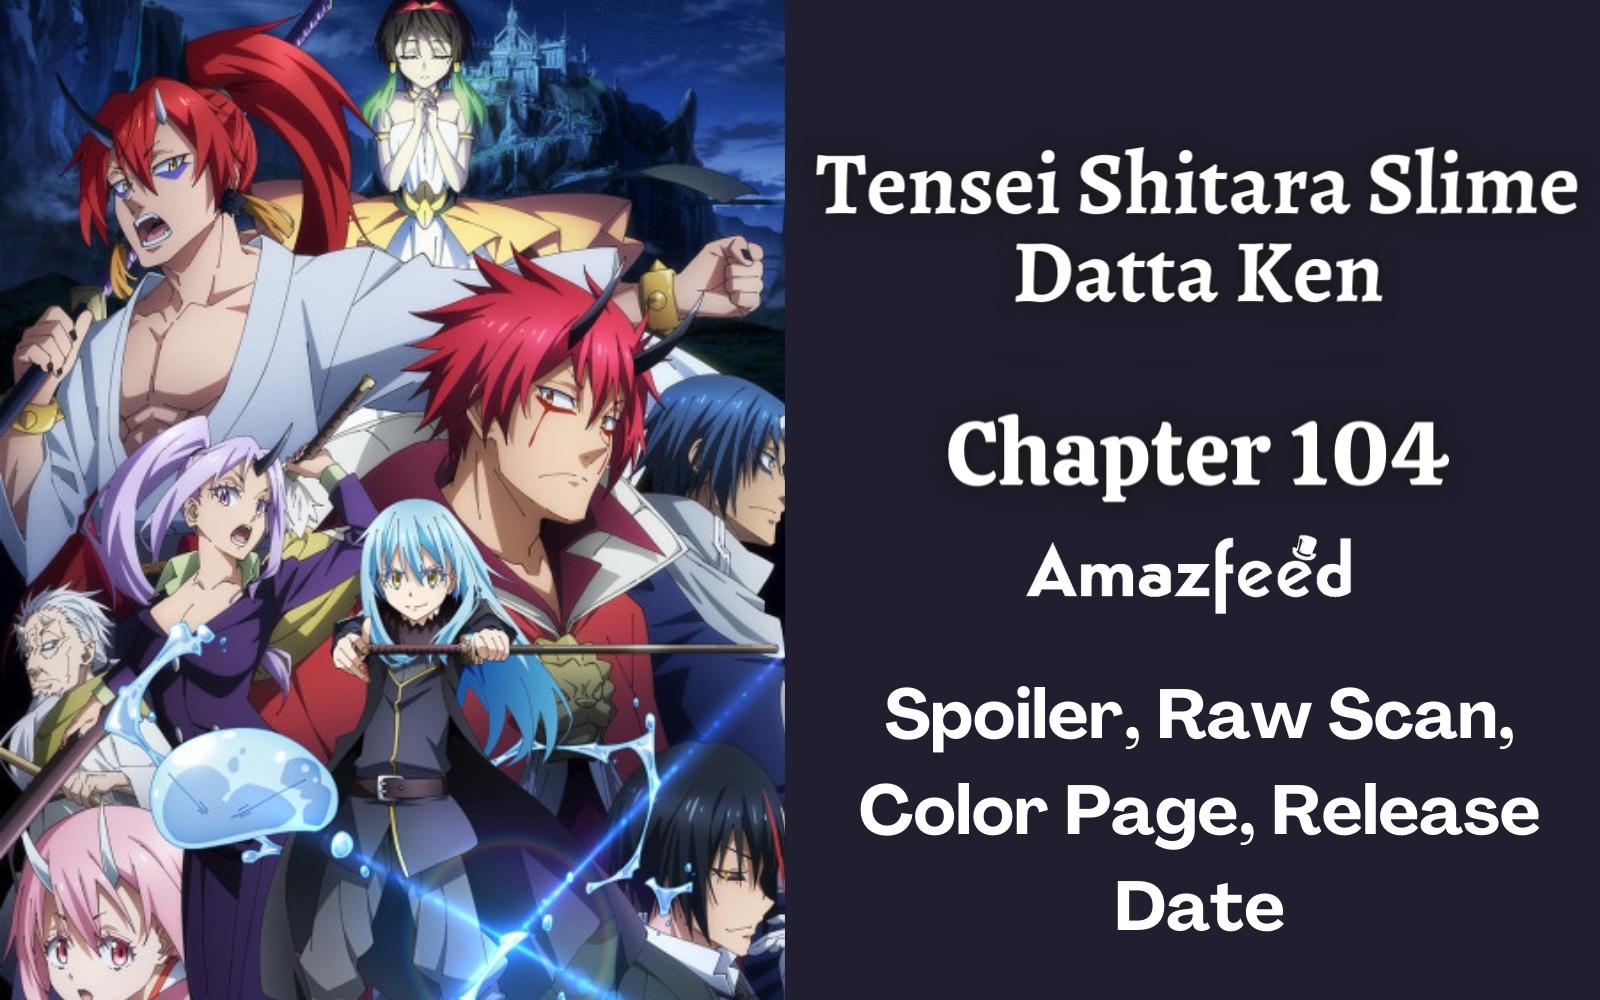 Tensei Shitara Slime Datta Ken Chapter 104 Spoiler, Raw Scan, Color Page, Release Date